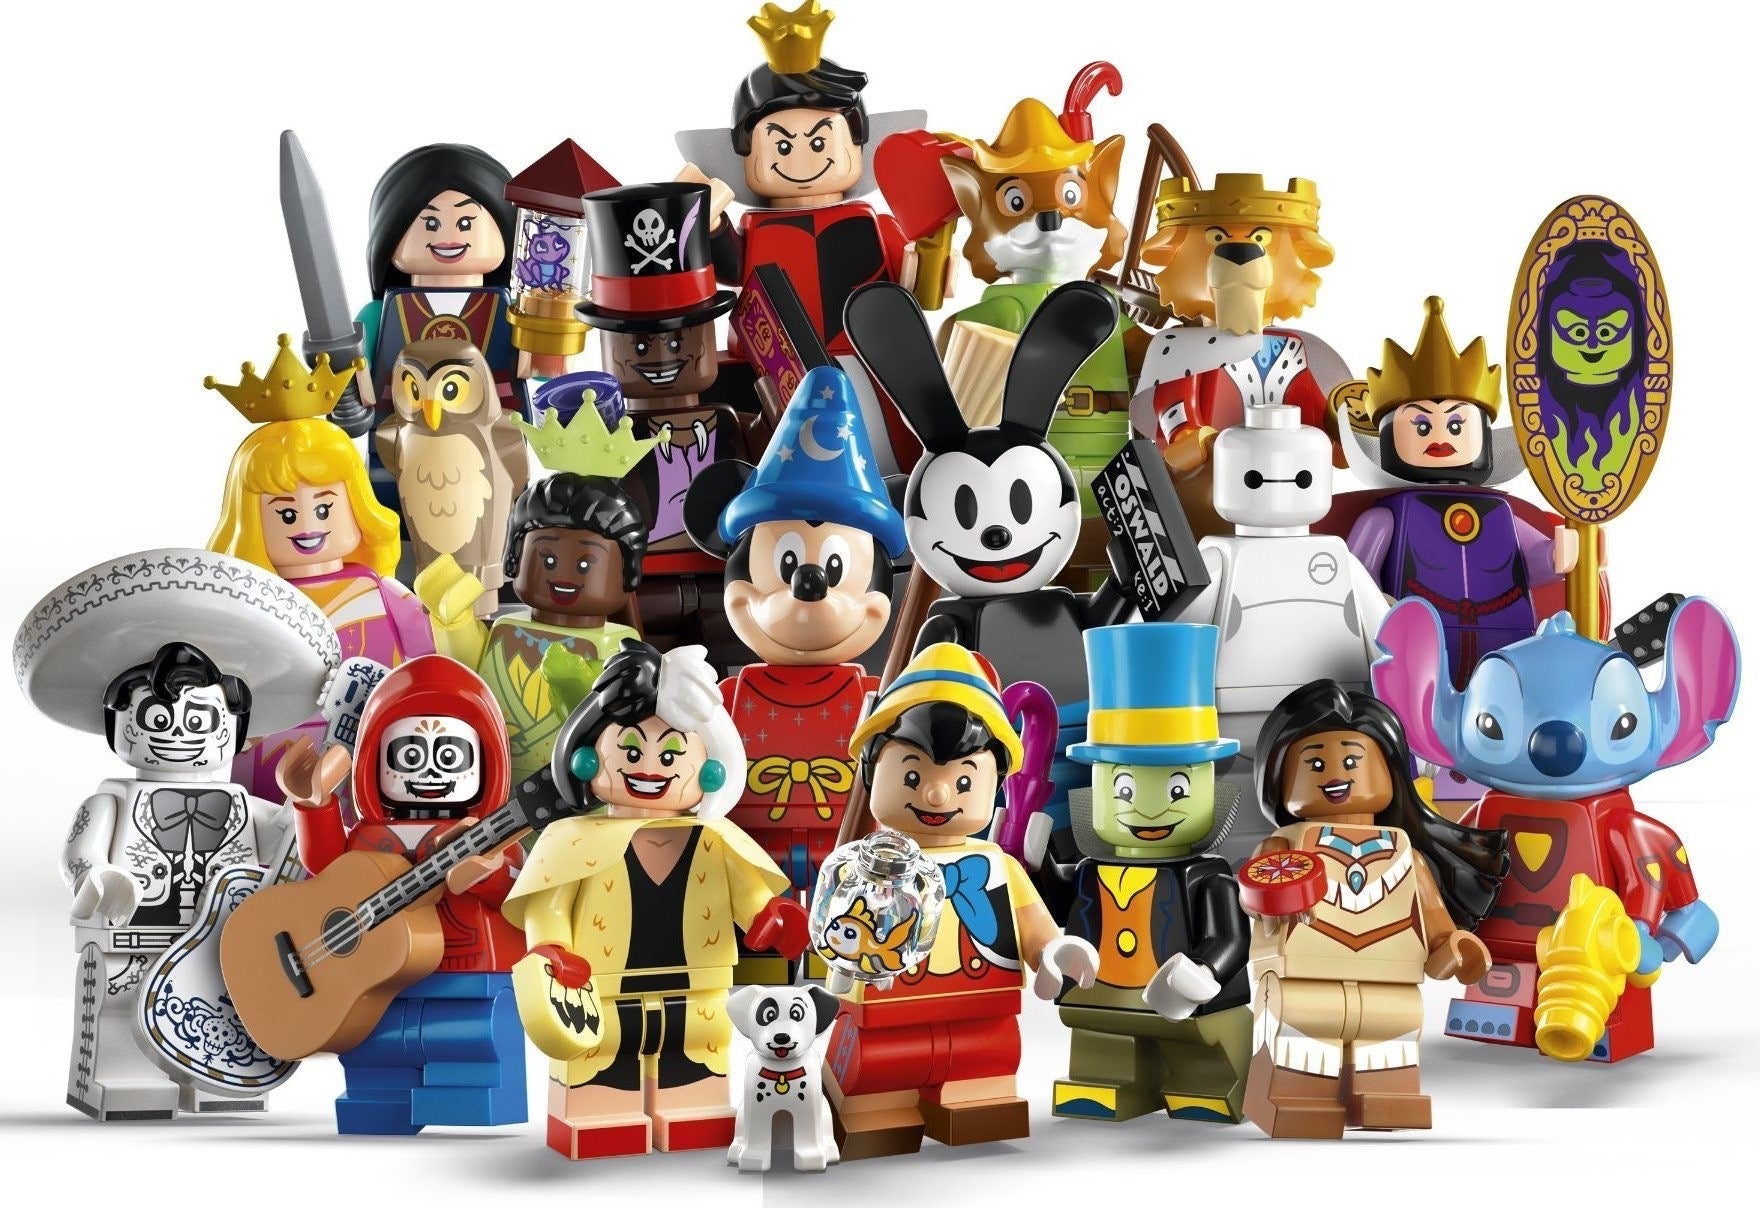 LEGO 71038 Minifigures Disney 100 Series